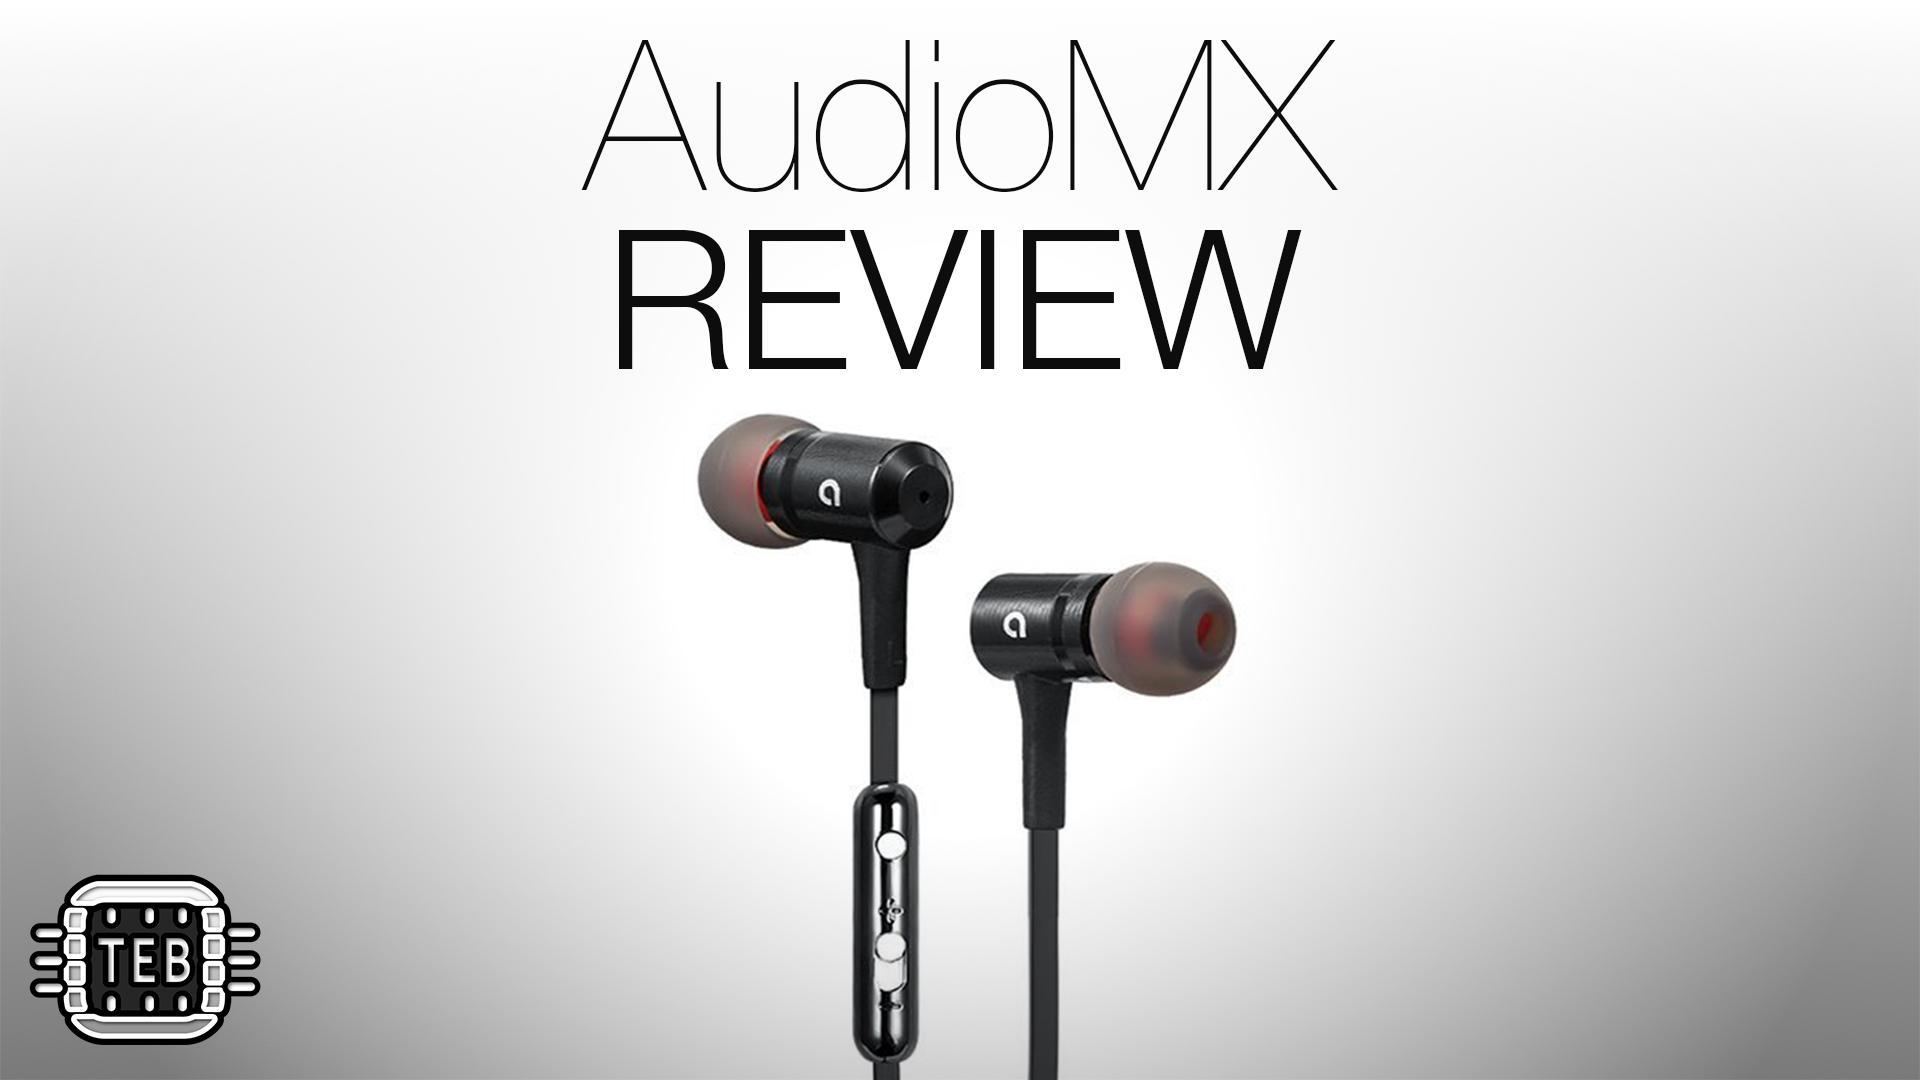 Auricolari in-ear AudioMX di Avantek: la REVIEW di TechEarthBlog [FOTO + VIDEO]